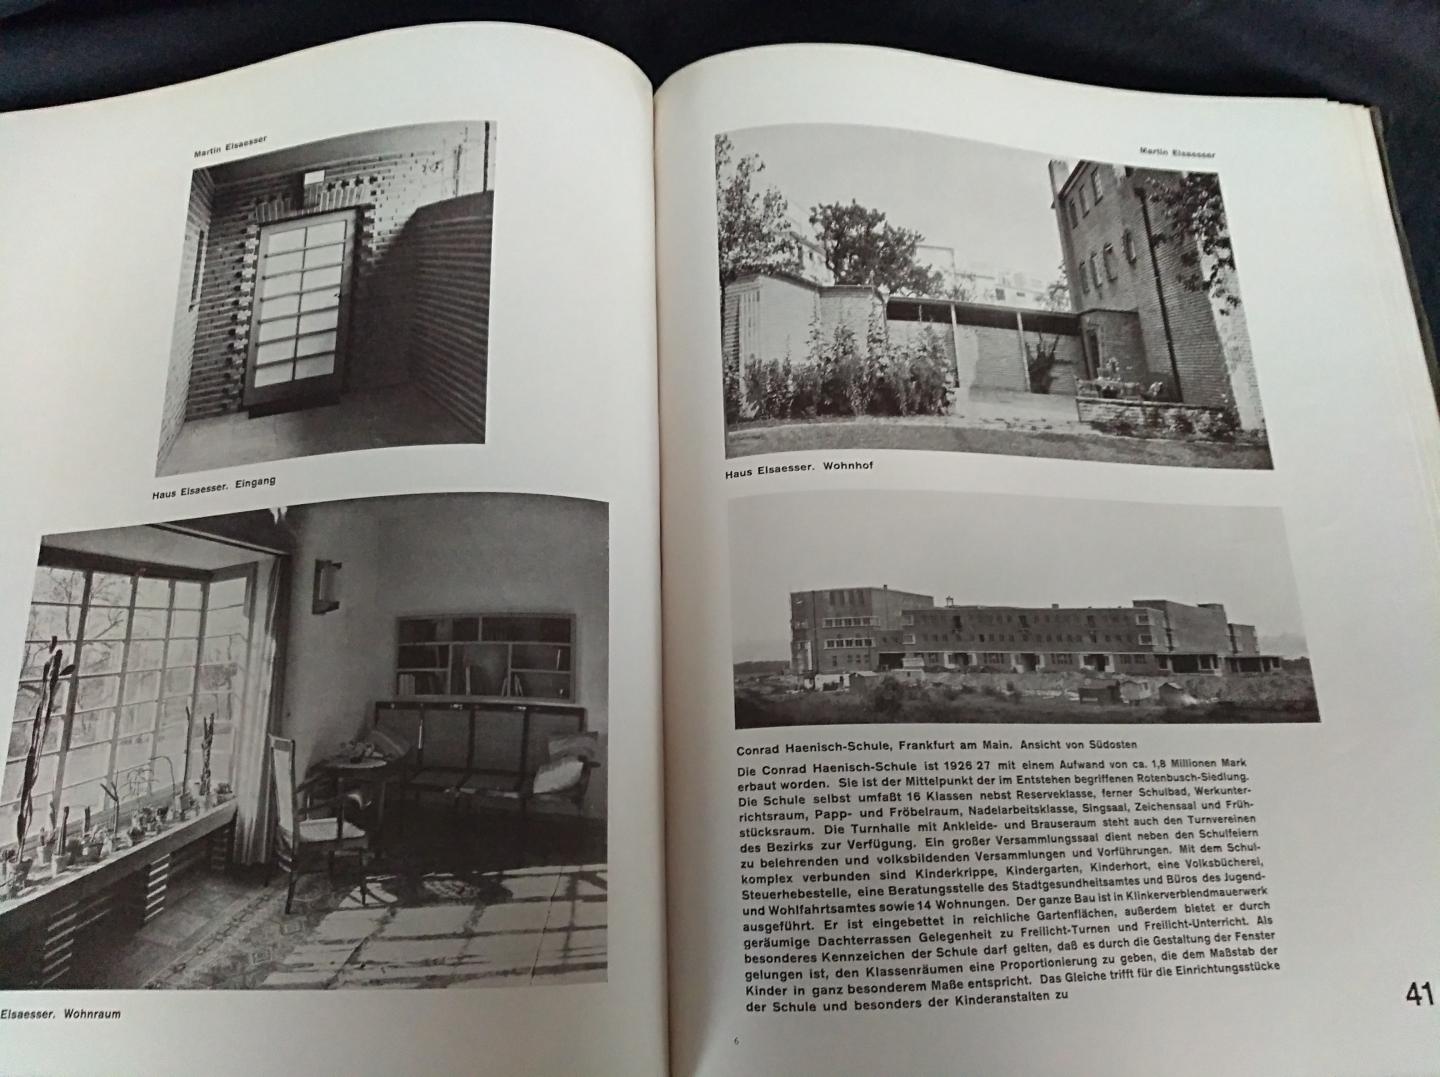 Pof. Dr.-Ing. Ed. Jobst Siedler Architect B D A - Jahrbuch der baukunst 1928 / 29